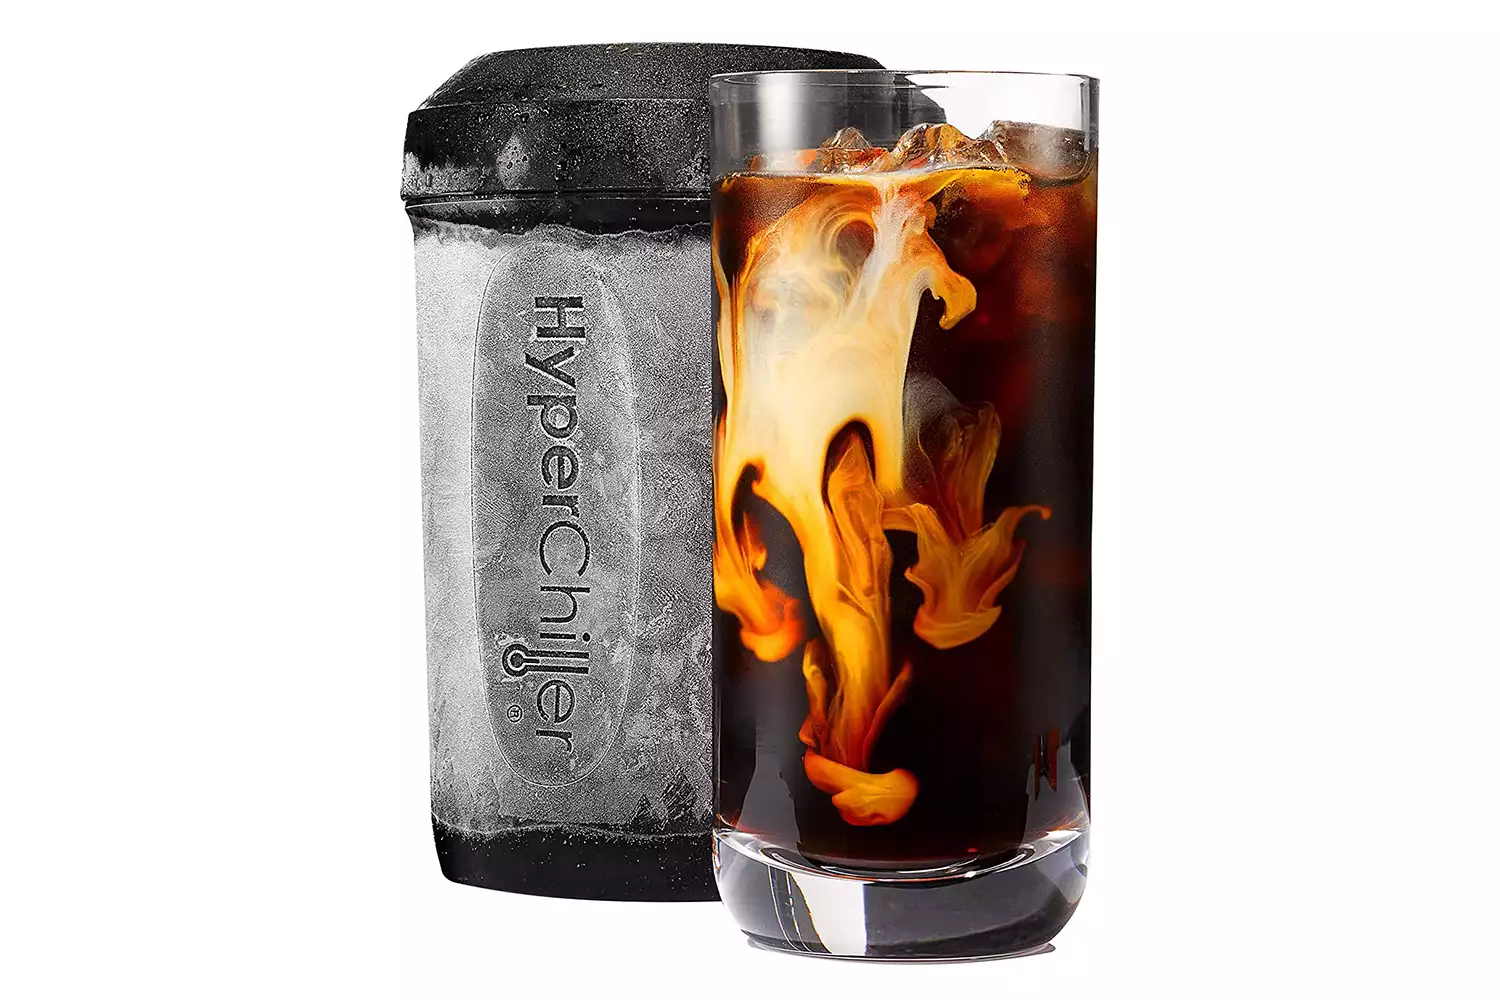 HyperChiller HC2 Iced Coffee/Beverage Cooler